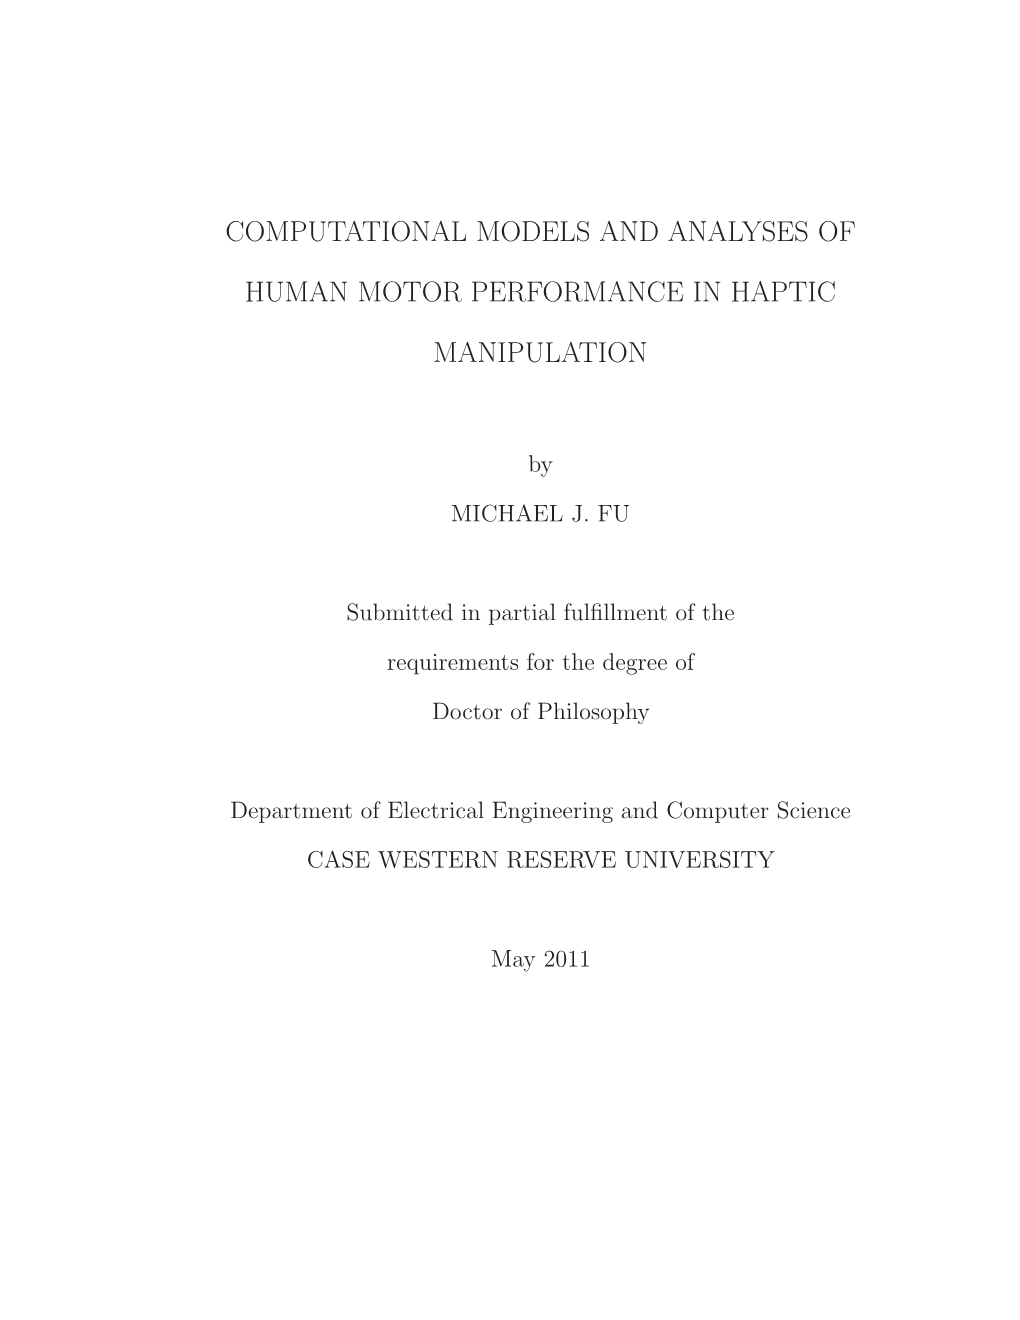 Computational Models and Analyses of Human Motor Performance in Haptic Manipulation